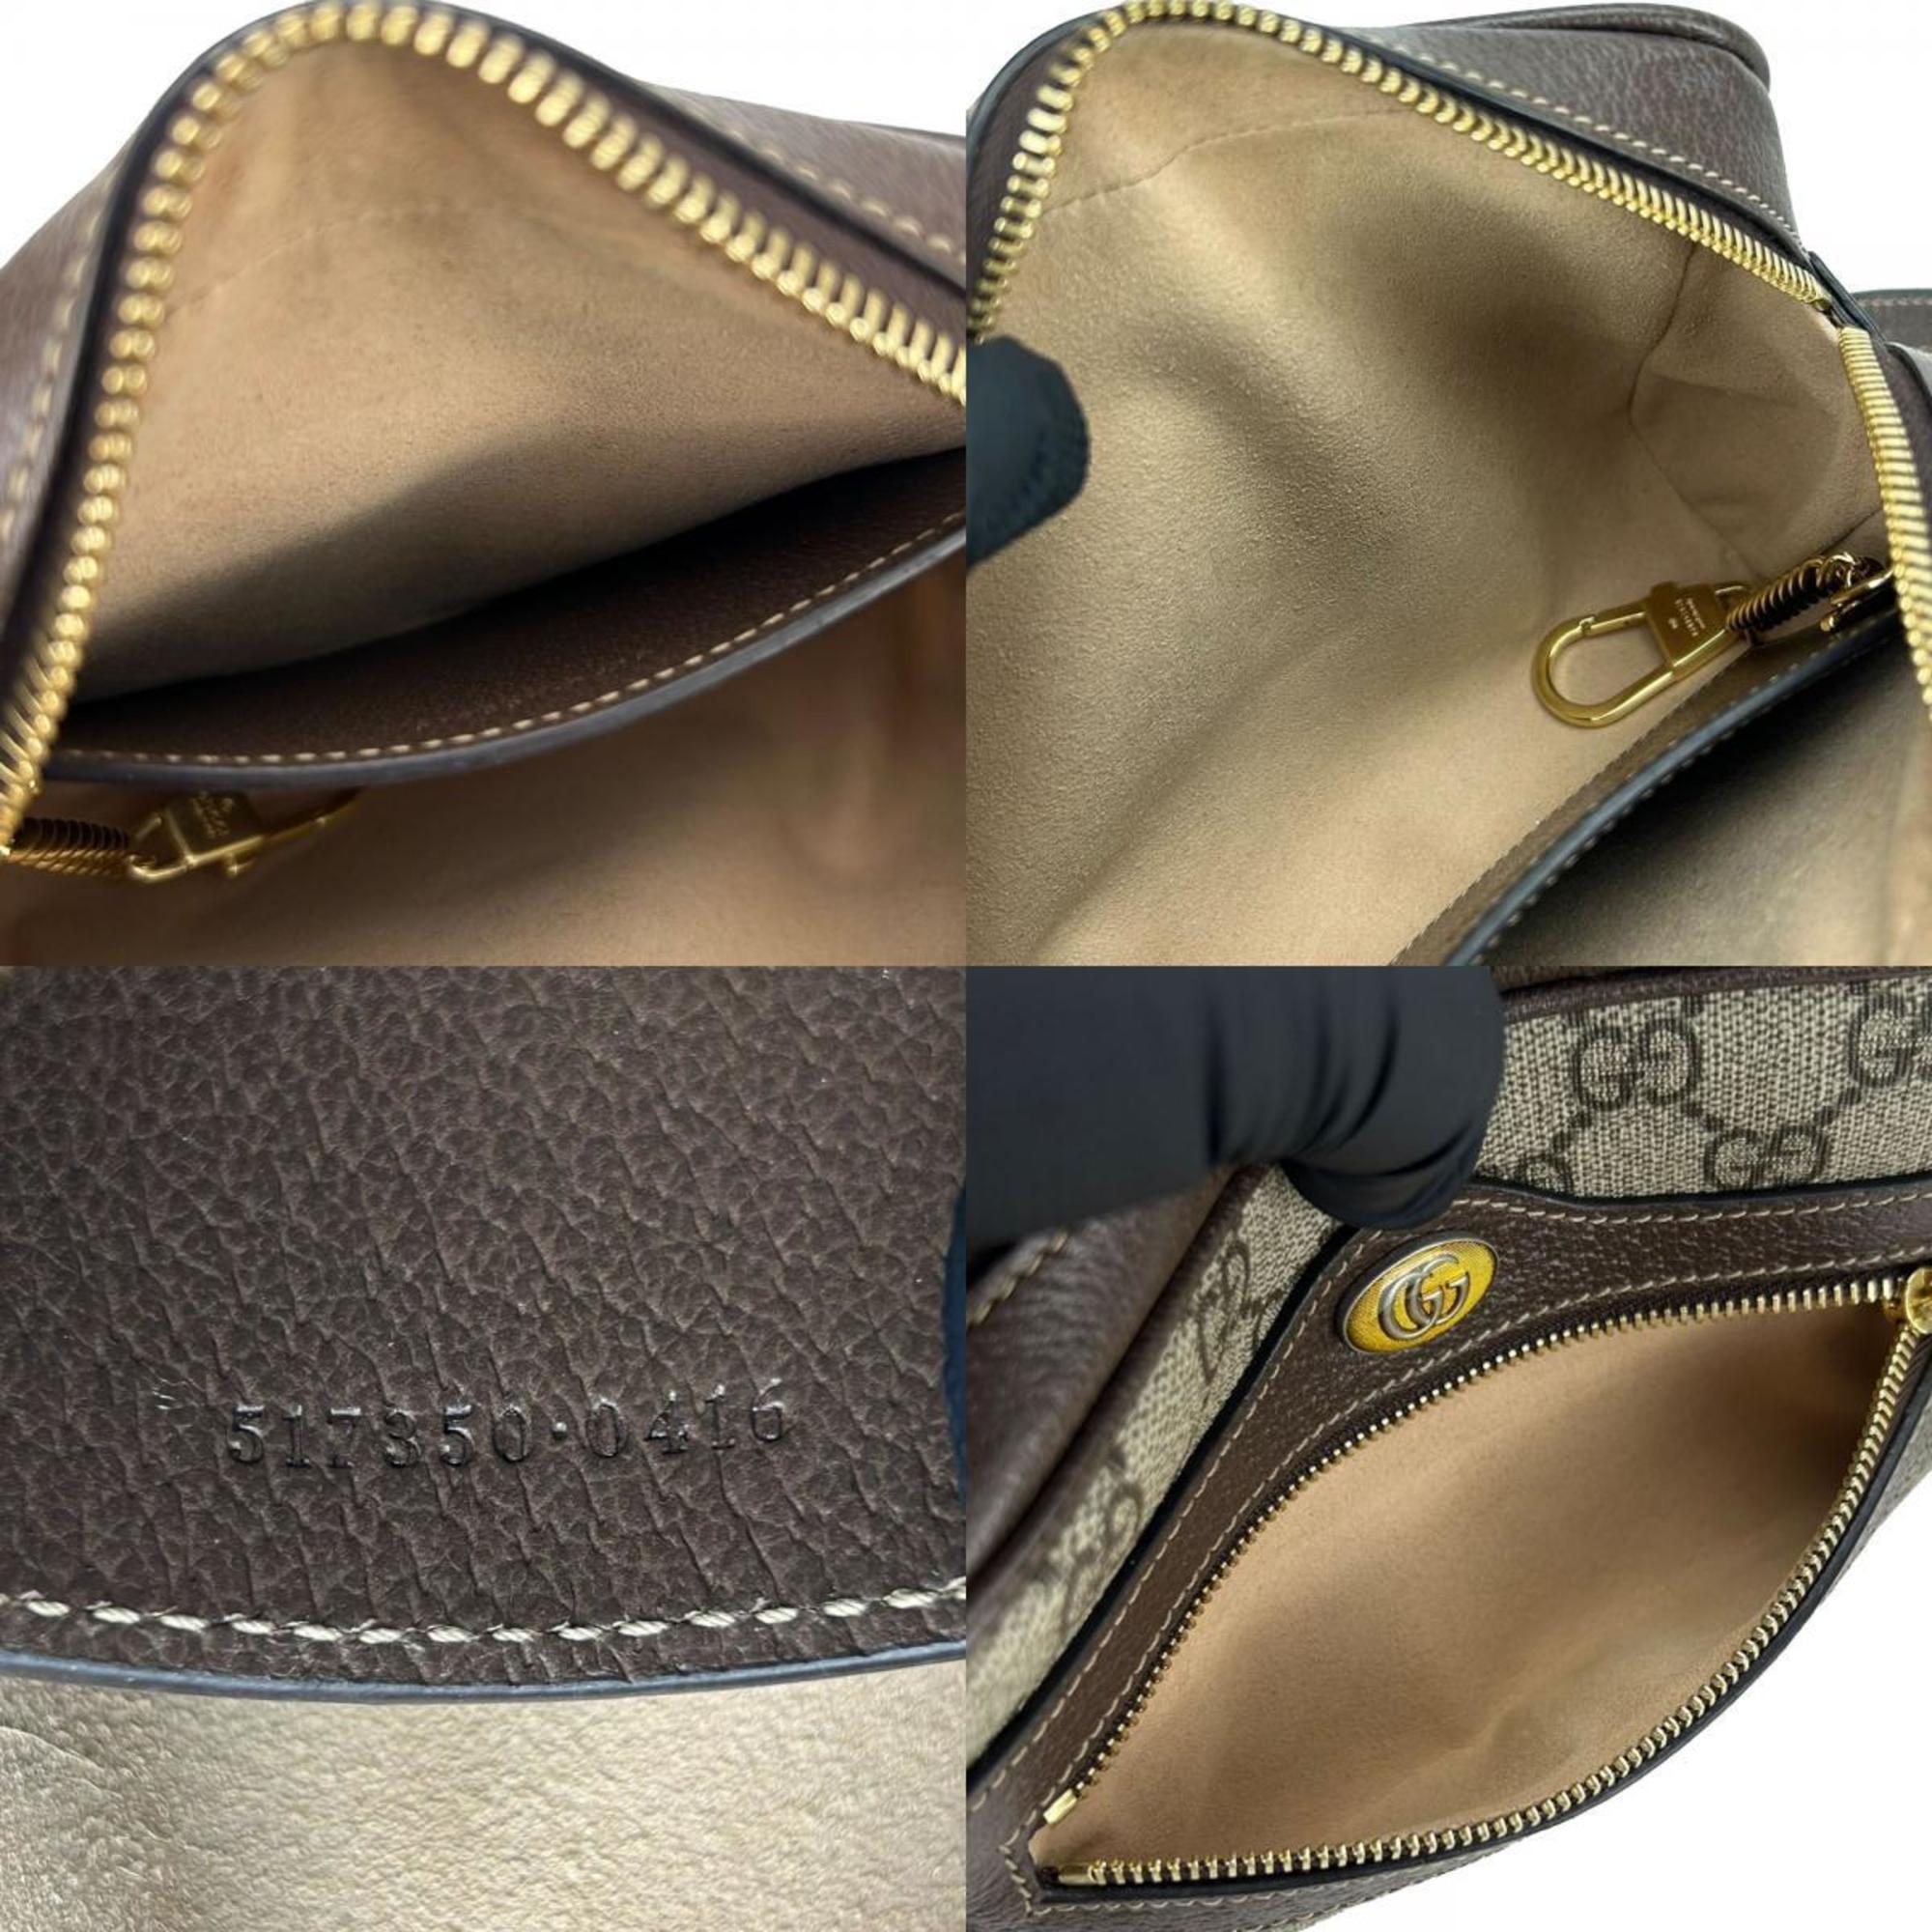 Gucci Shoulder Bag Offdia 517350 Sherry Line GG Supreme Canvas Leather Beige Brown Women's Men's GUCCI